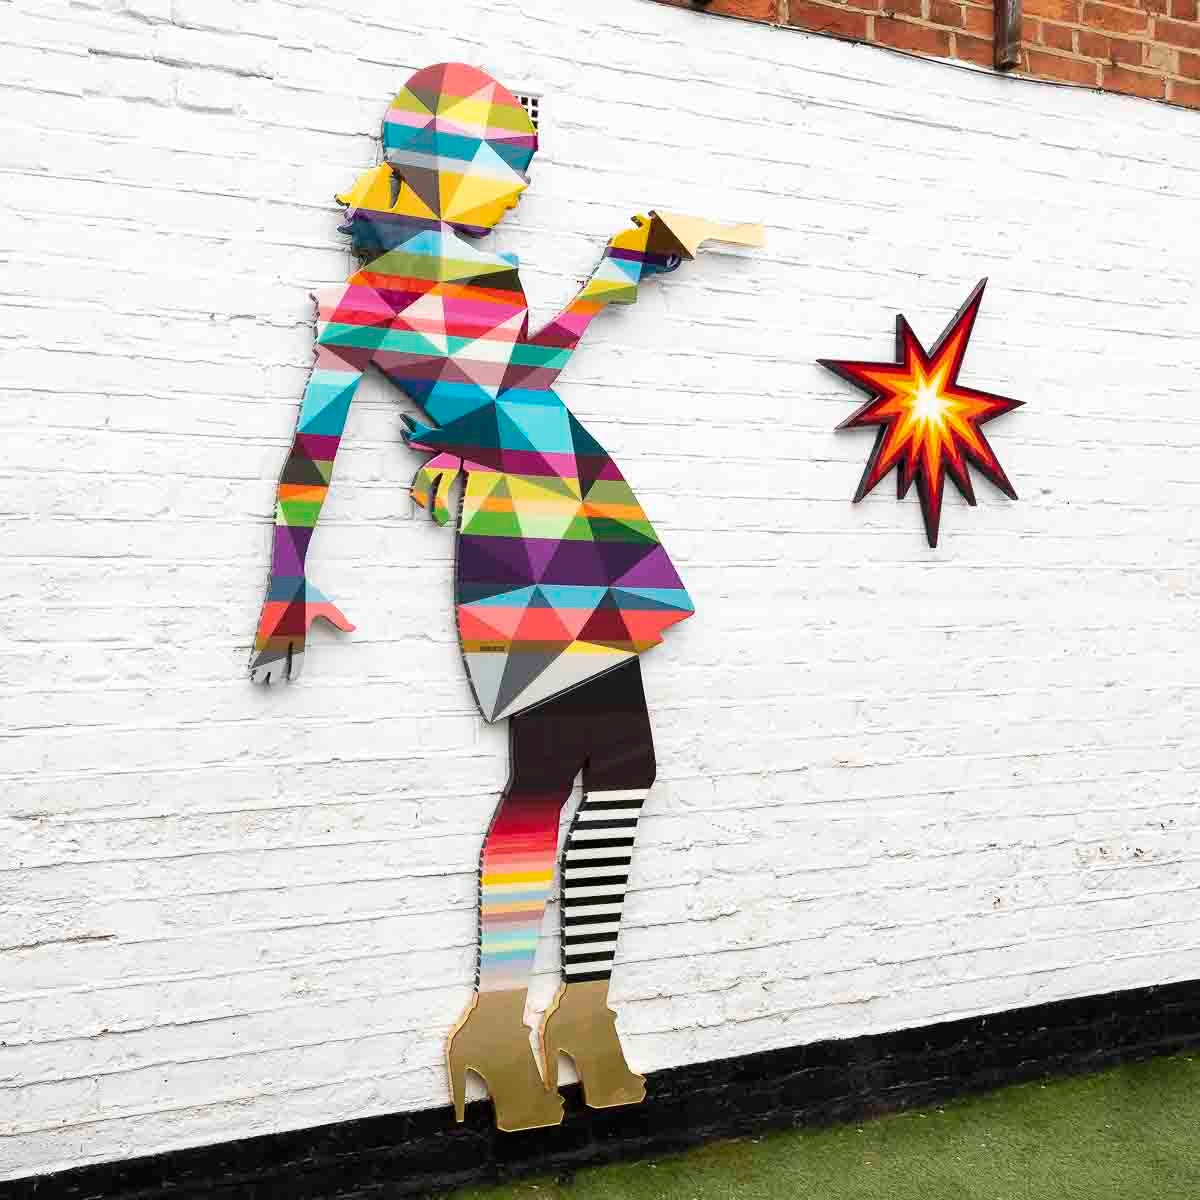 Little Miss Sunshine Two Part XL Wall Sculpture - Geometric Striped Lhouette Wall Sculpture